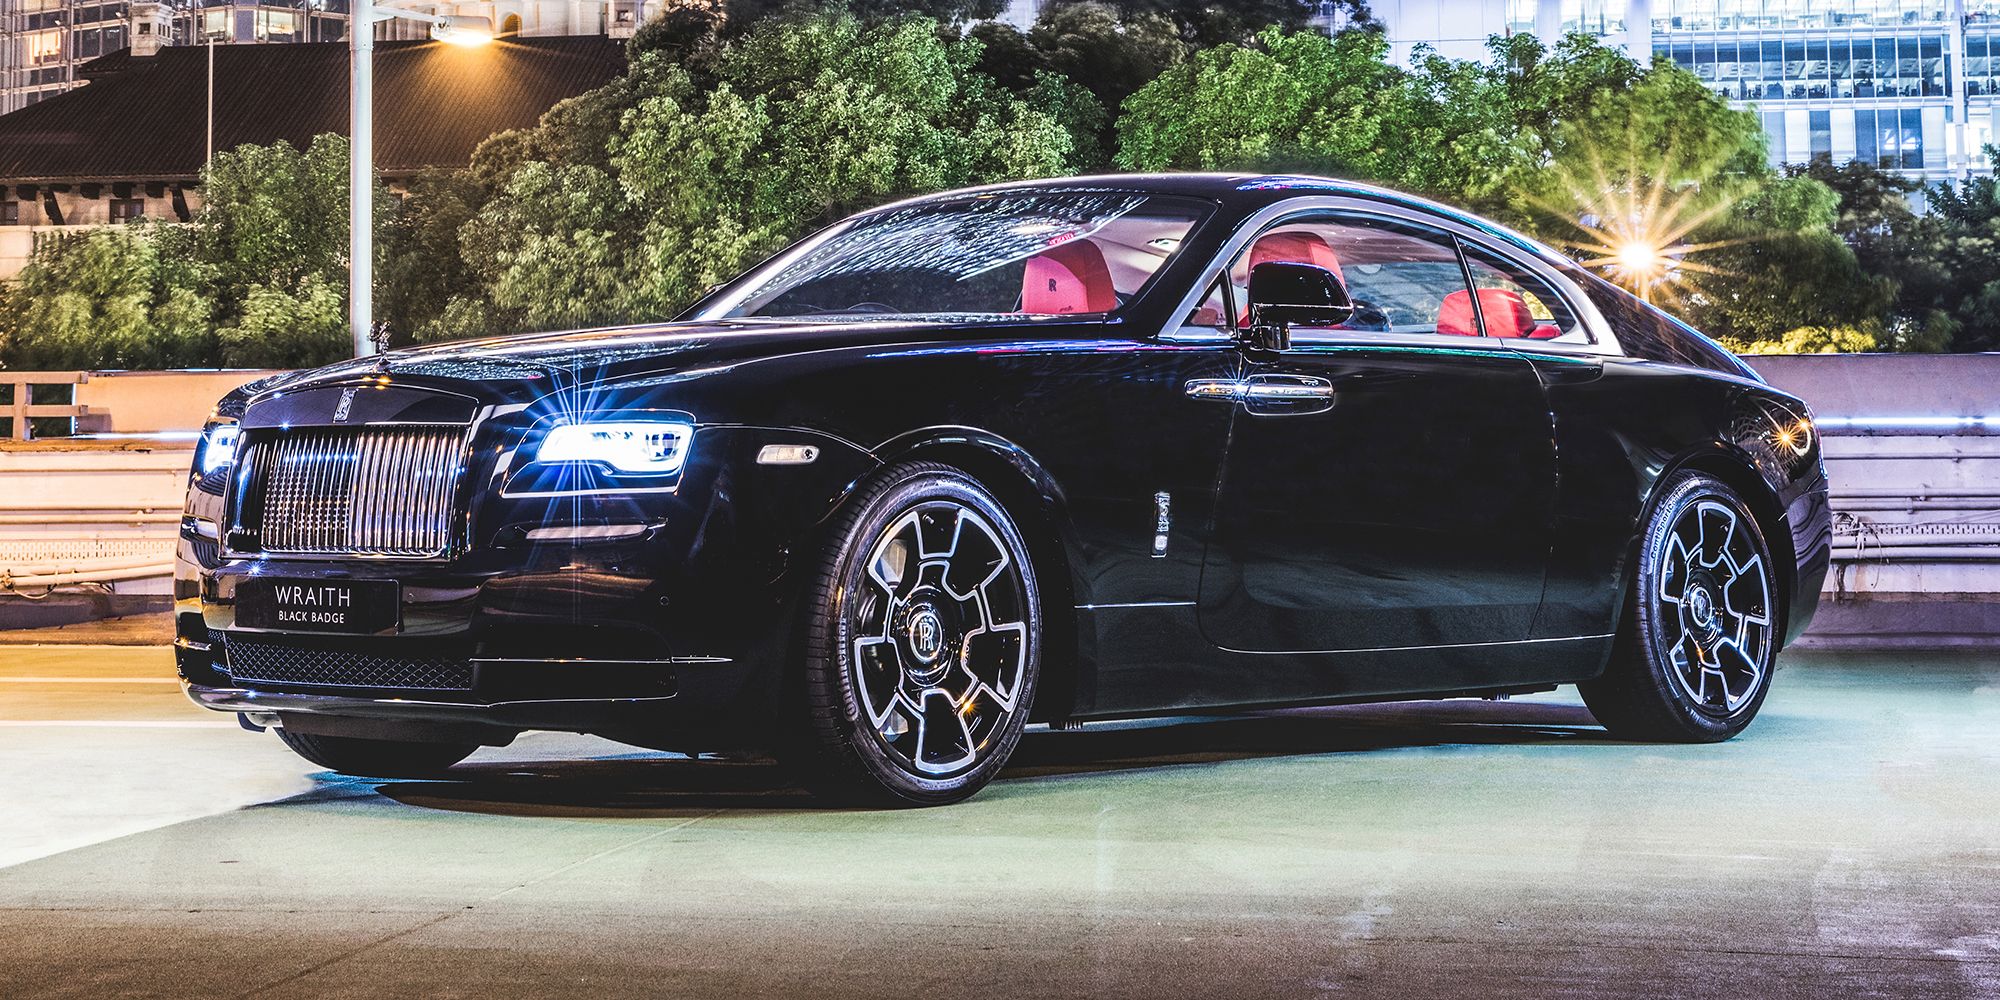 New Rolls Royce Wraith Photos Prices And Specs in Saudi Arabia